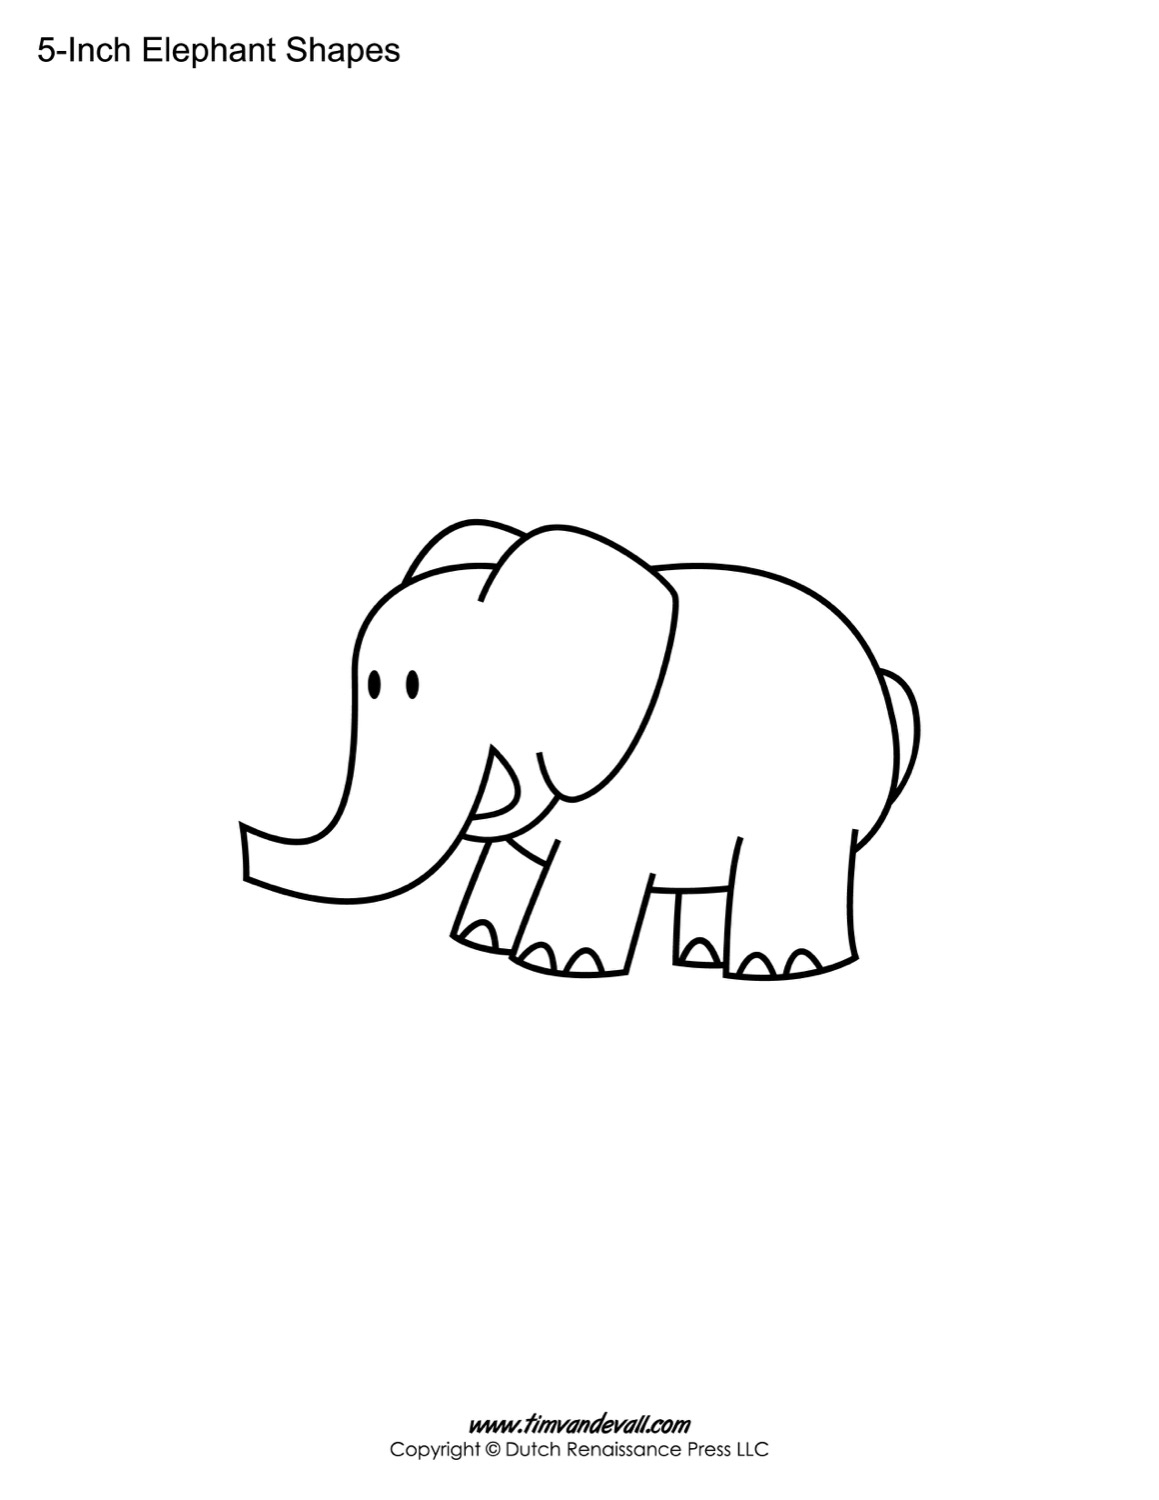 Printable Elephant Templates / Elephant Shapes For Kids With Regard To Blank Elephant Template